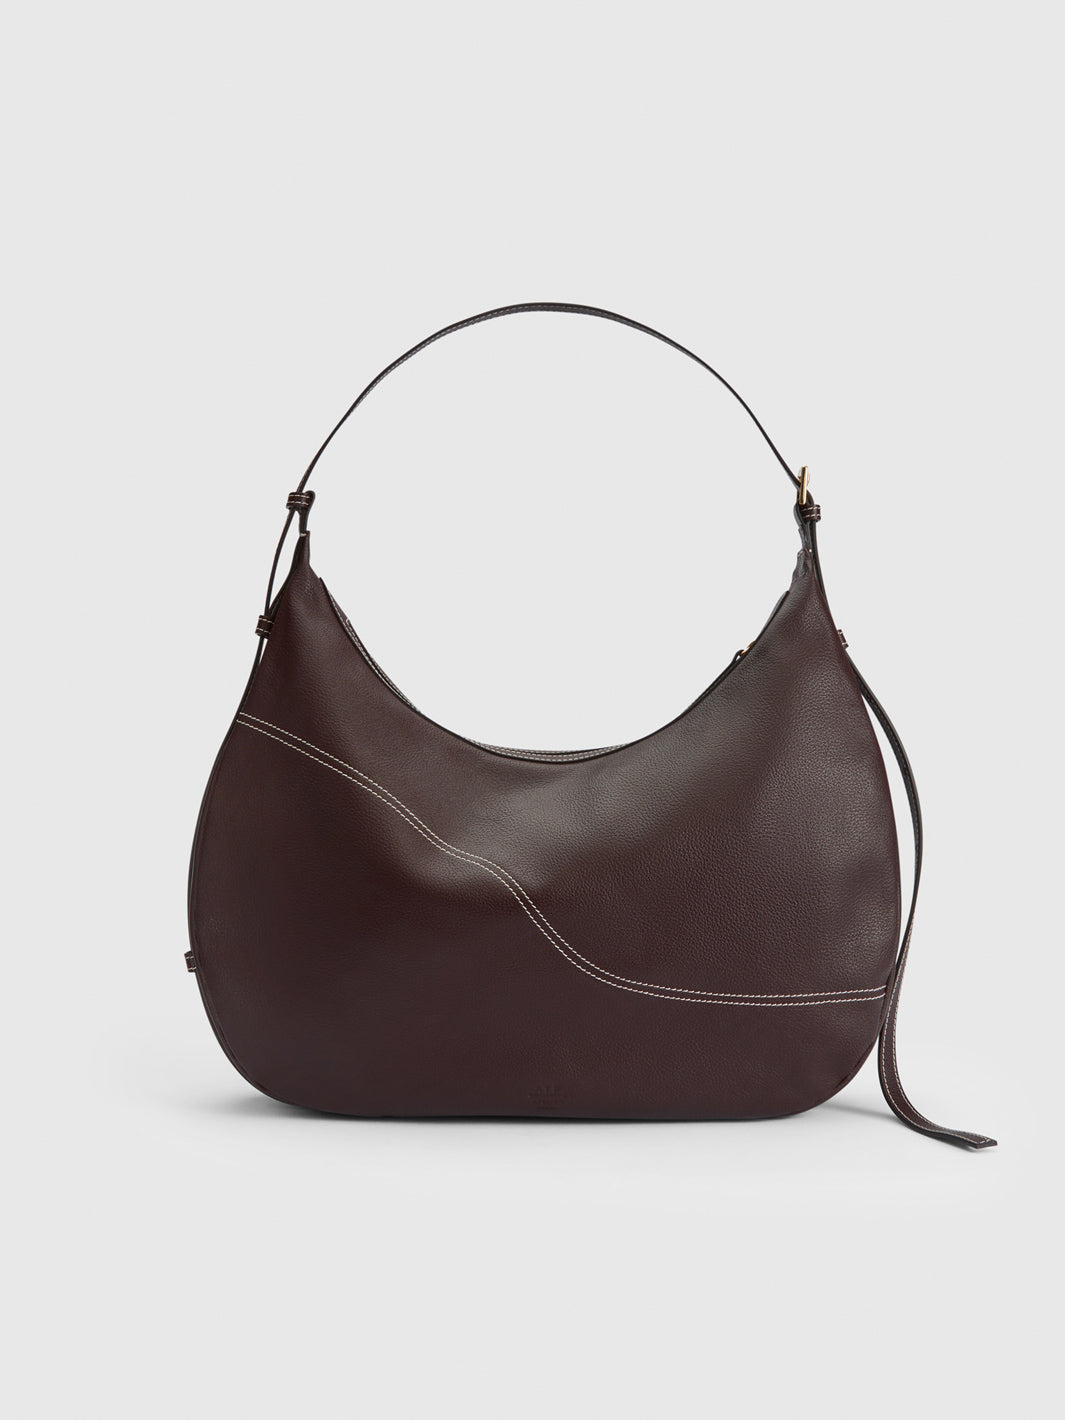 Potenza Walnut/Contrast Stitch Grained Leather Large hobo bag